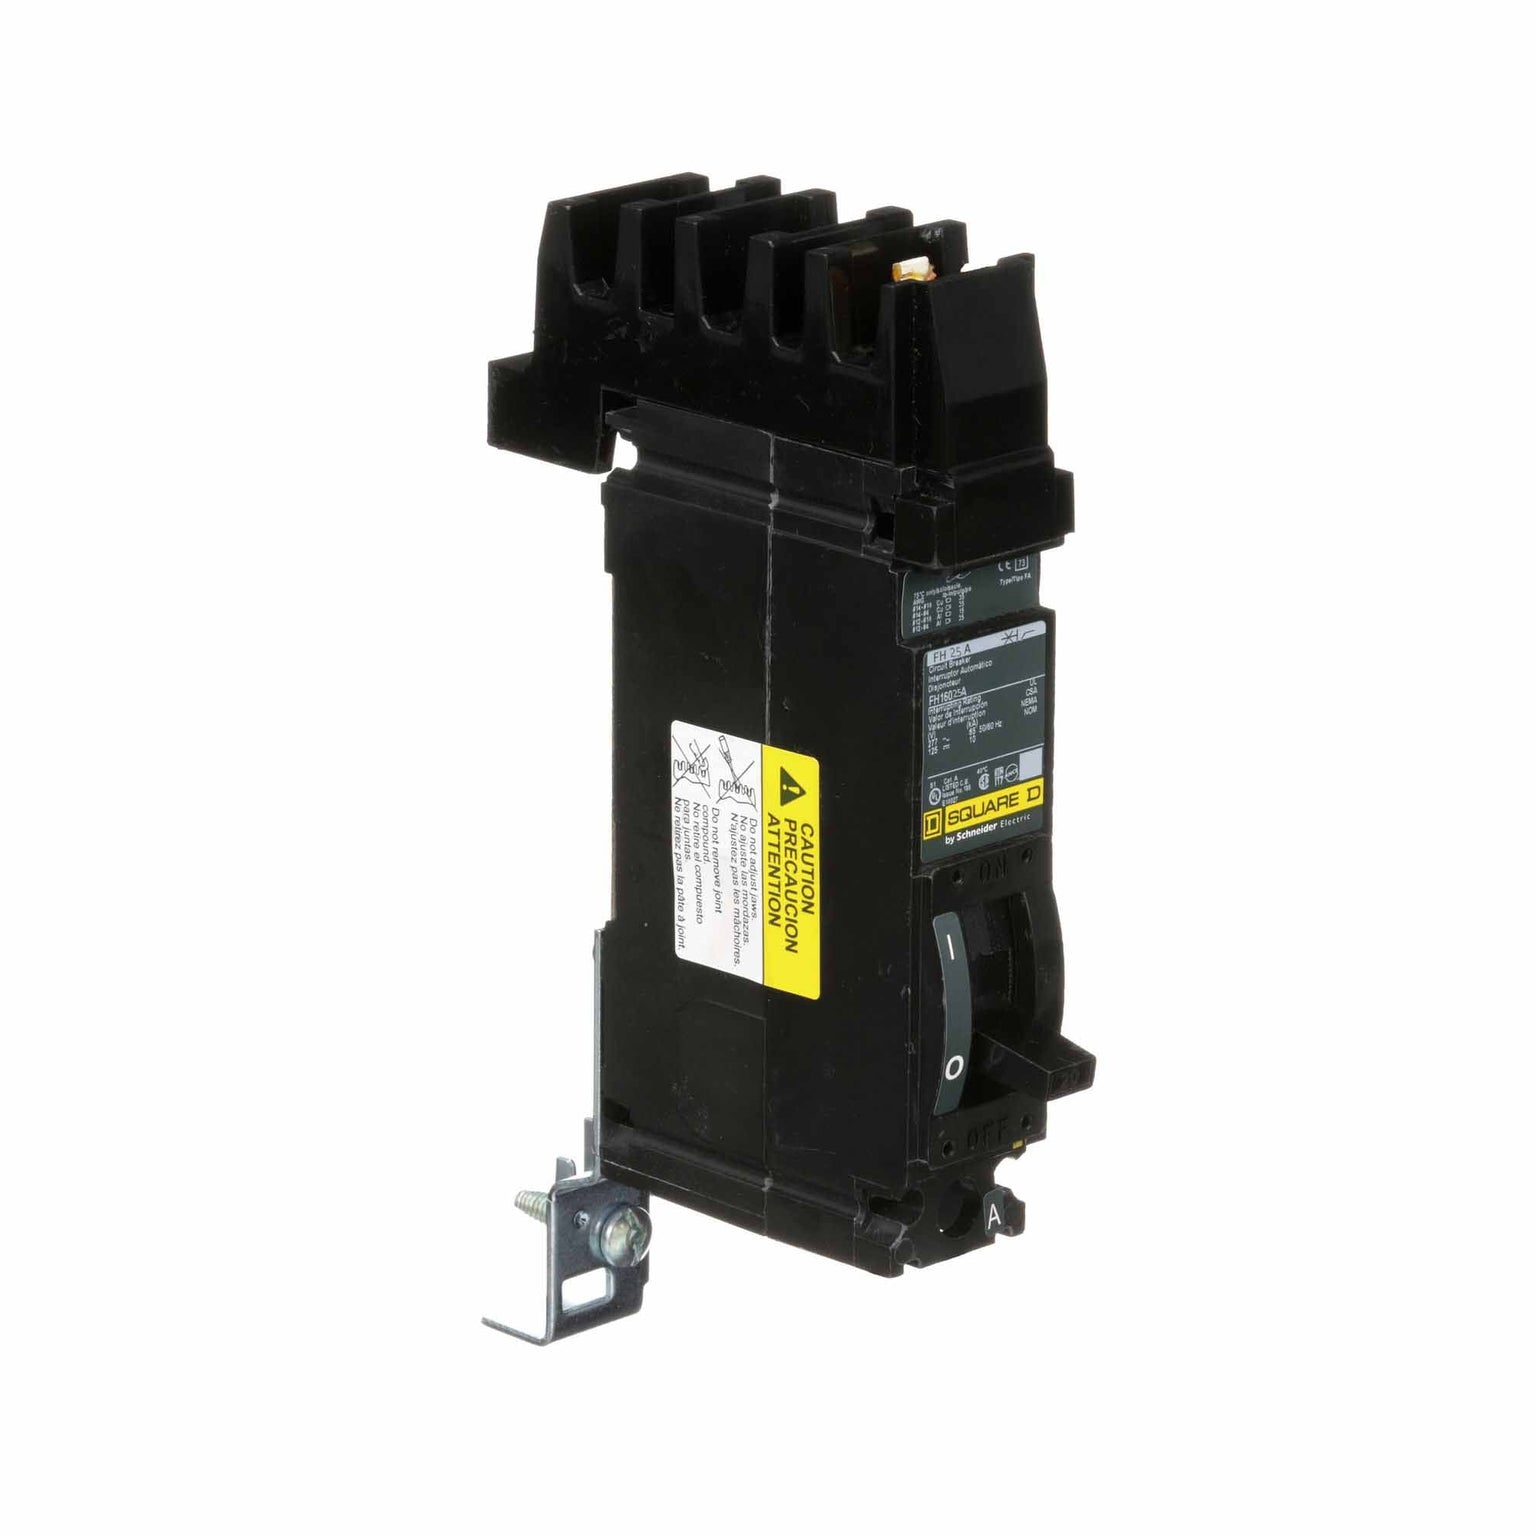 FH16025A - Square D - Molded Case Circuit Breaker